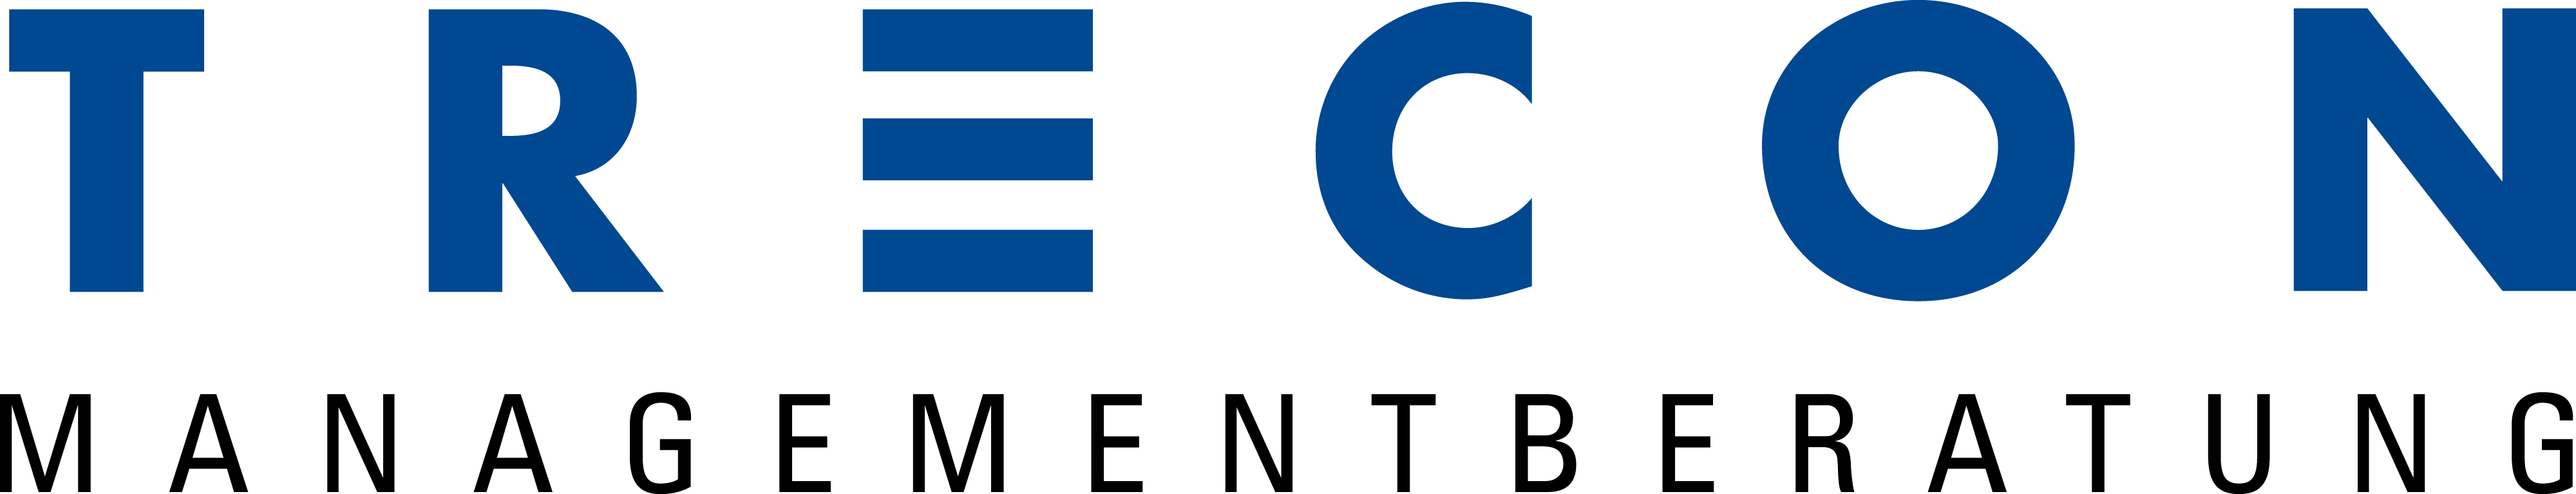 TRECON Managementberatung Logo